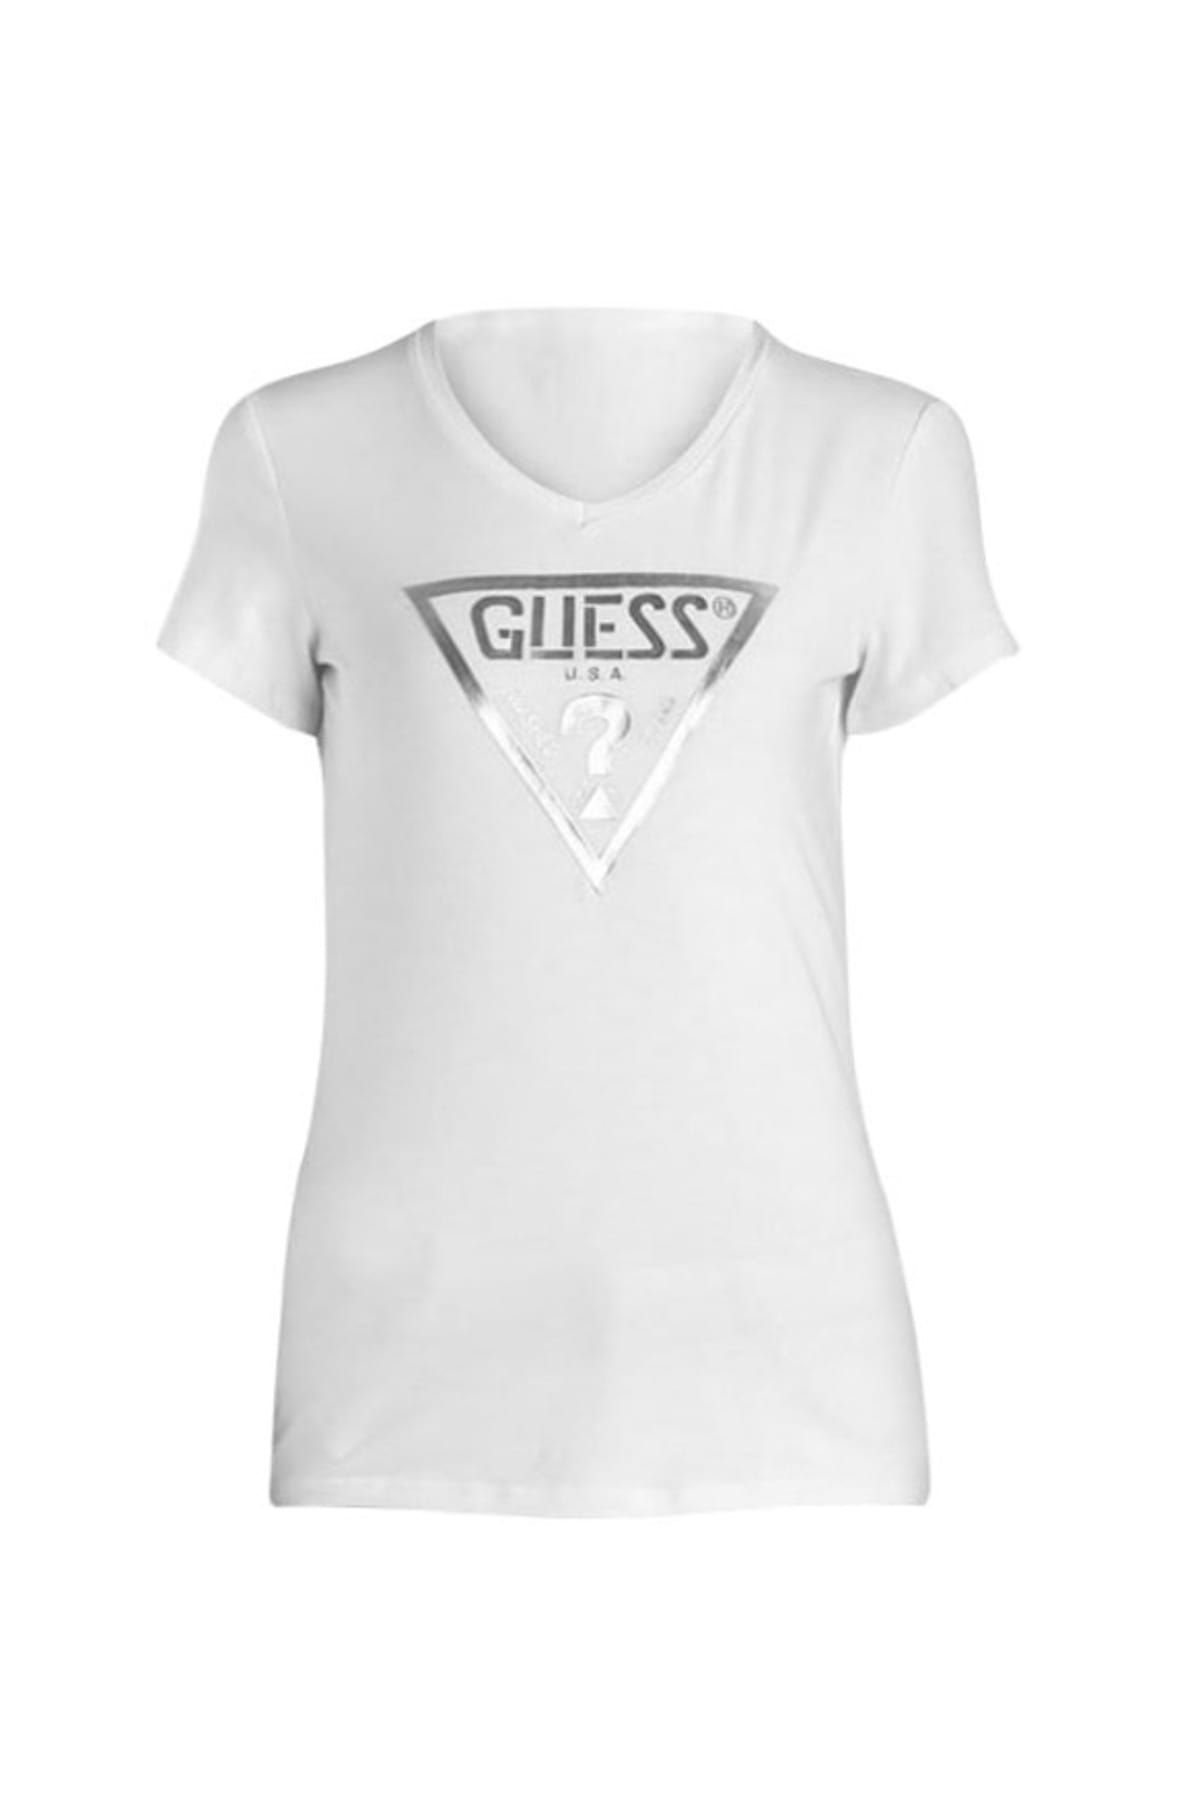 Guess Kadın Beyaz T-Shirt 250237001002